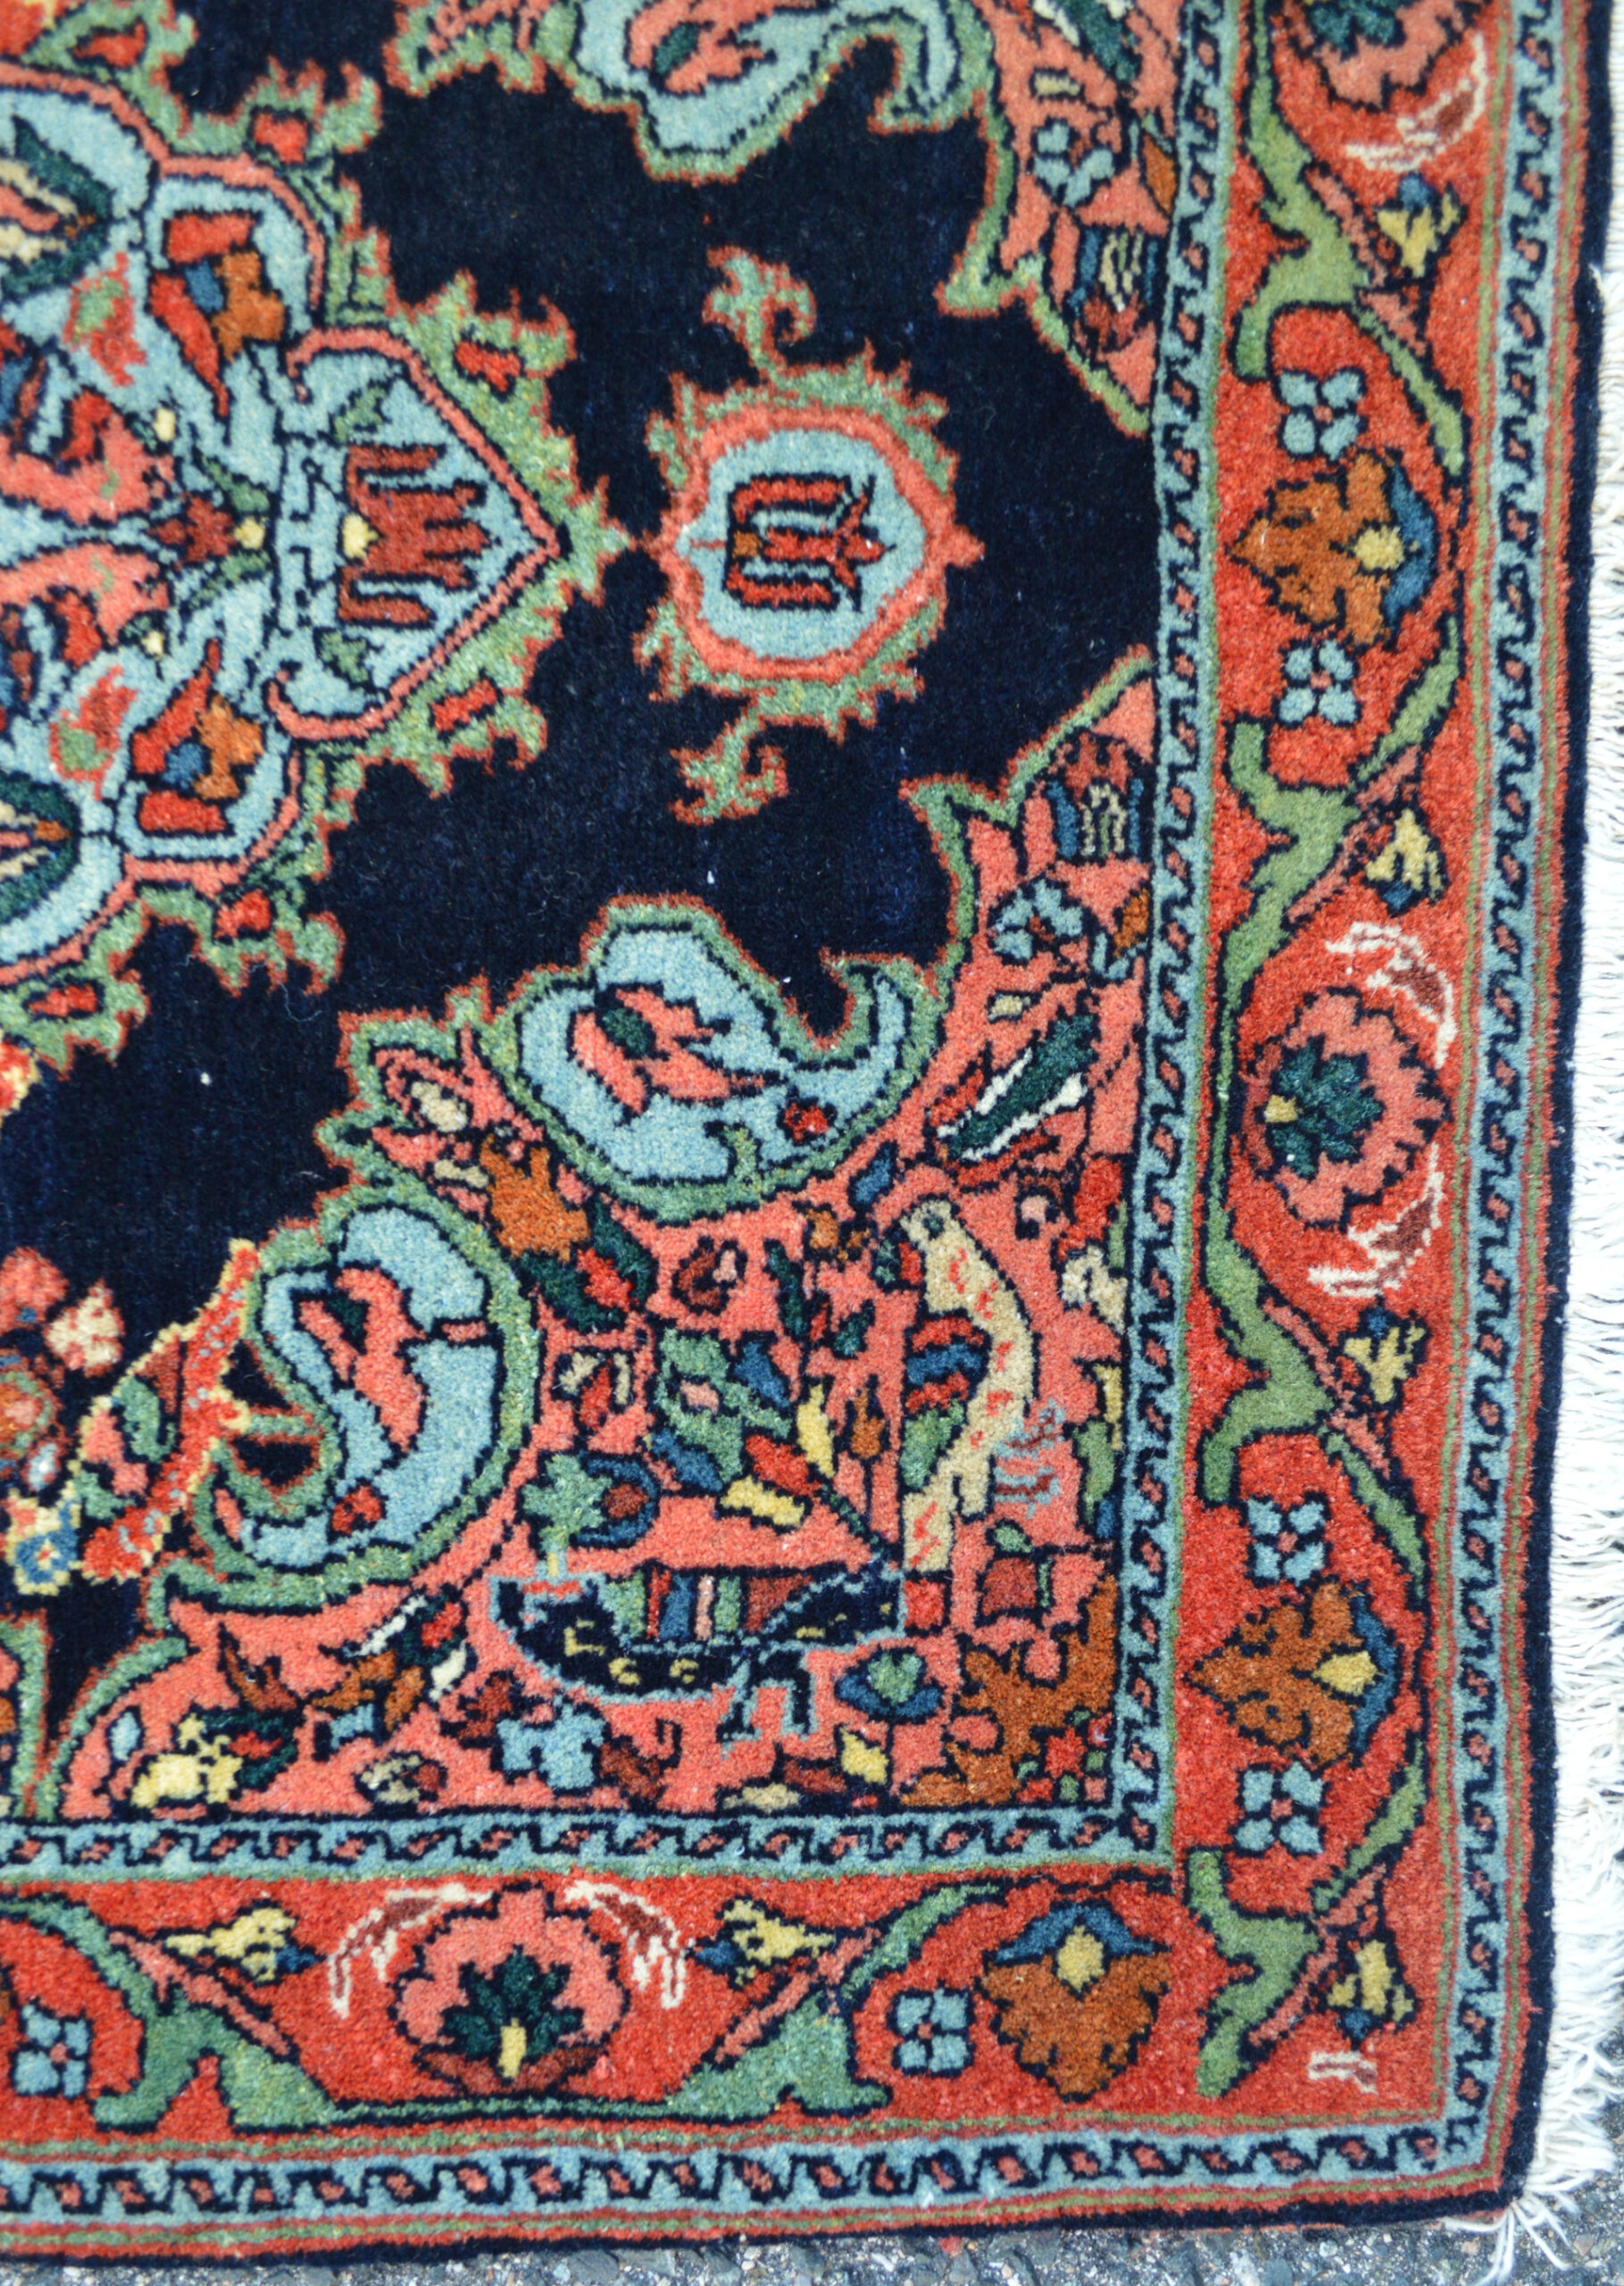 Detail of birds in the corner spandrels of an antique Persian Bidjar rug